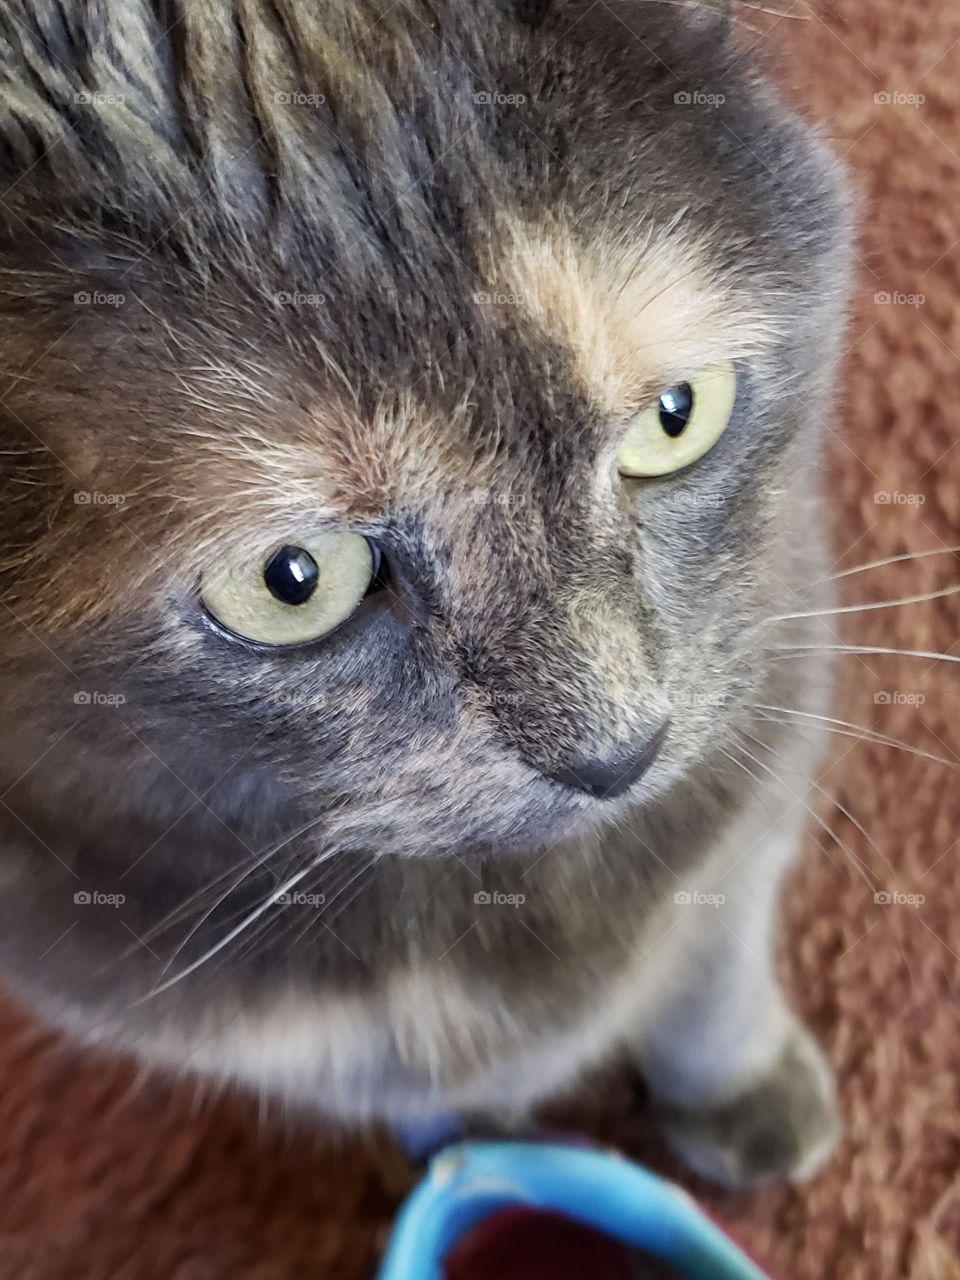 Sweet kitty with beautiful eyes